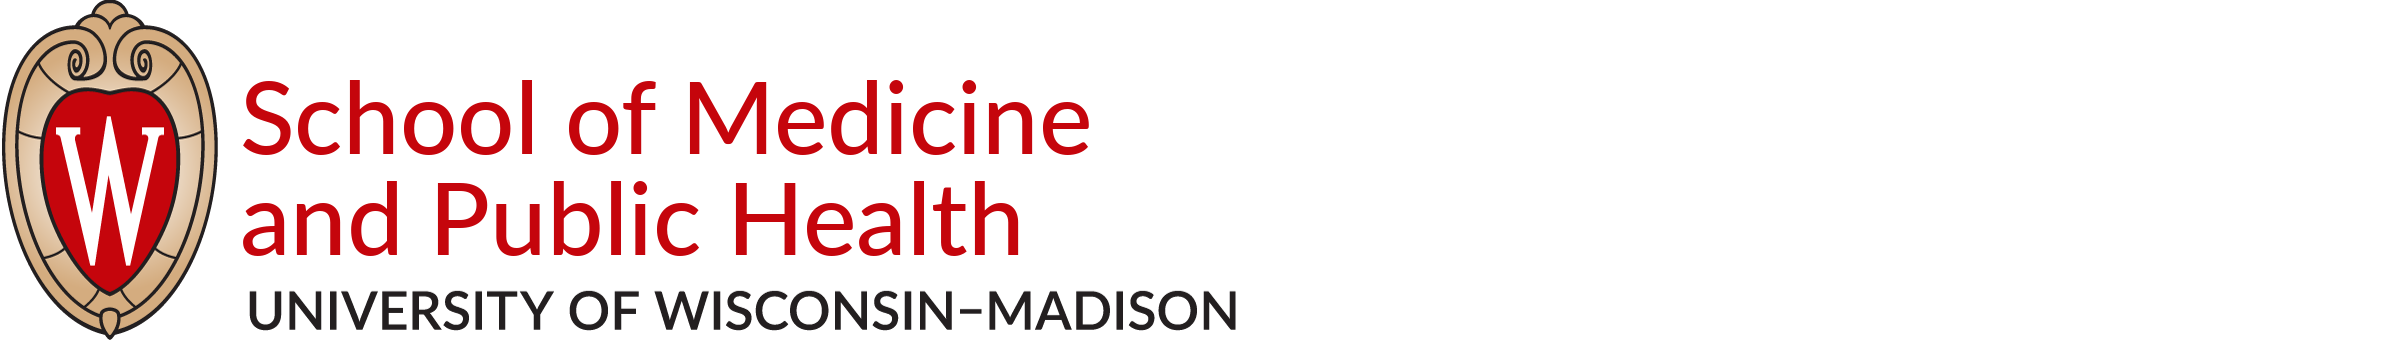 University of Wisconsin-Madison, School of Medicine and Public Health logo